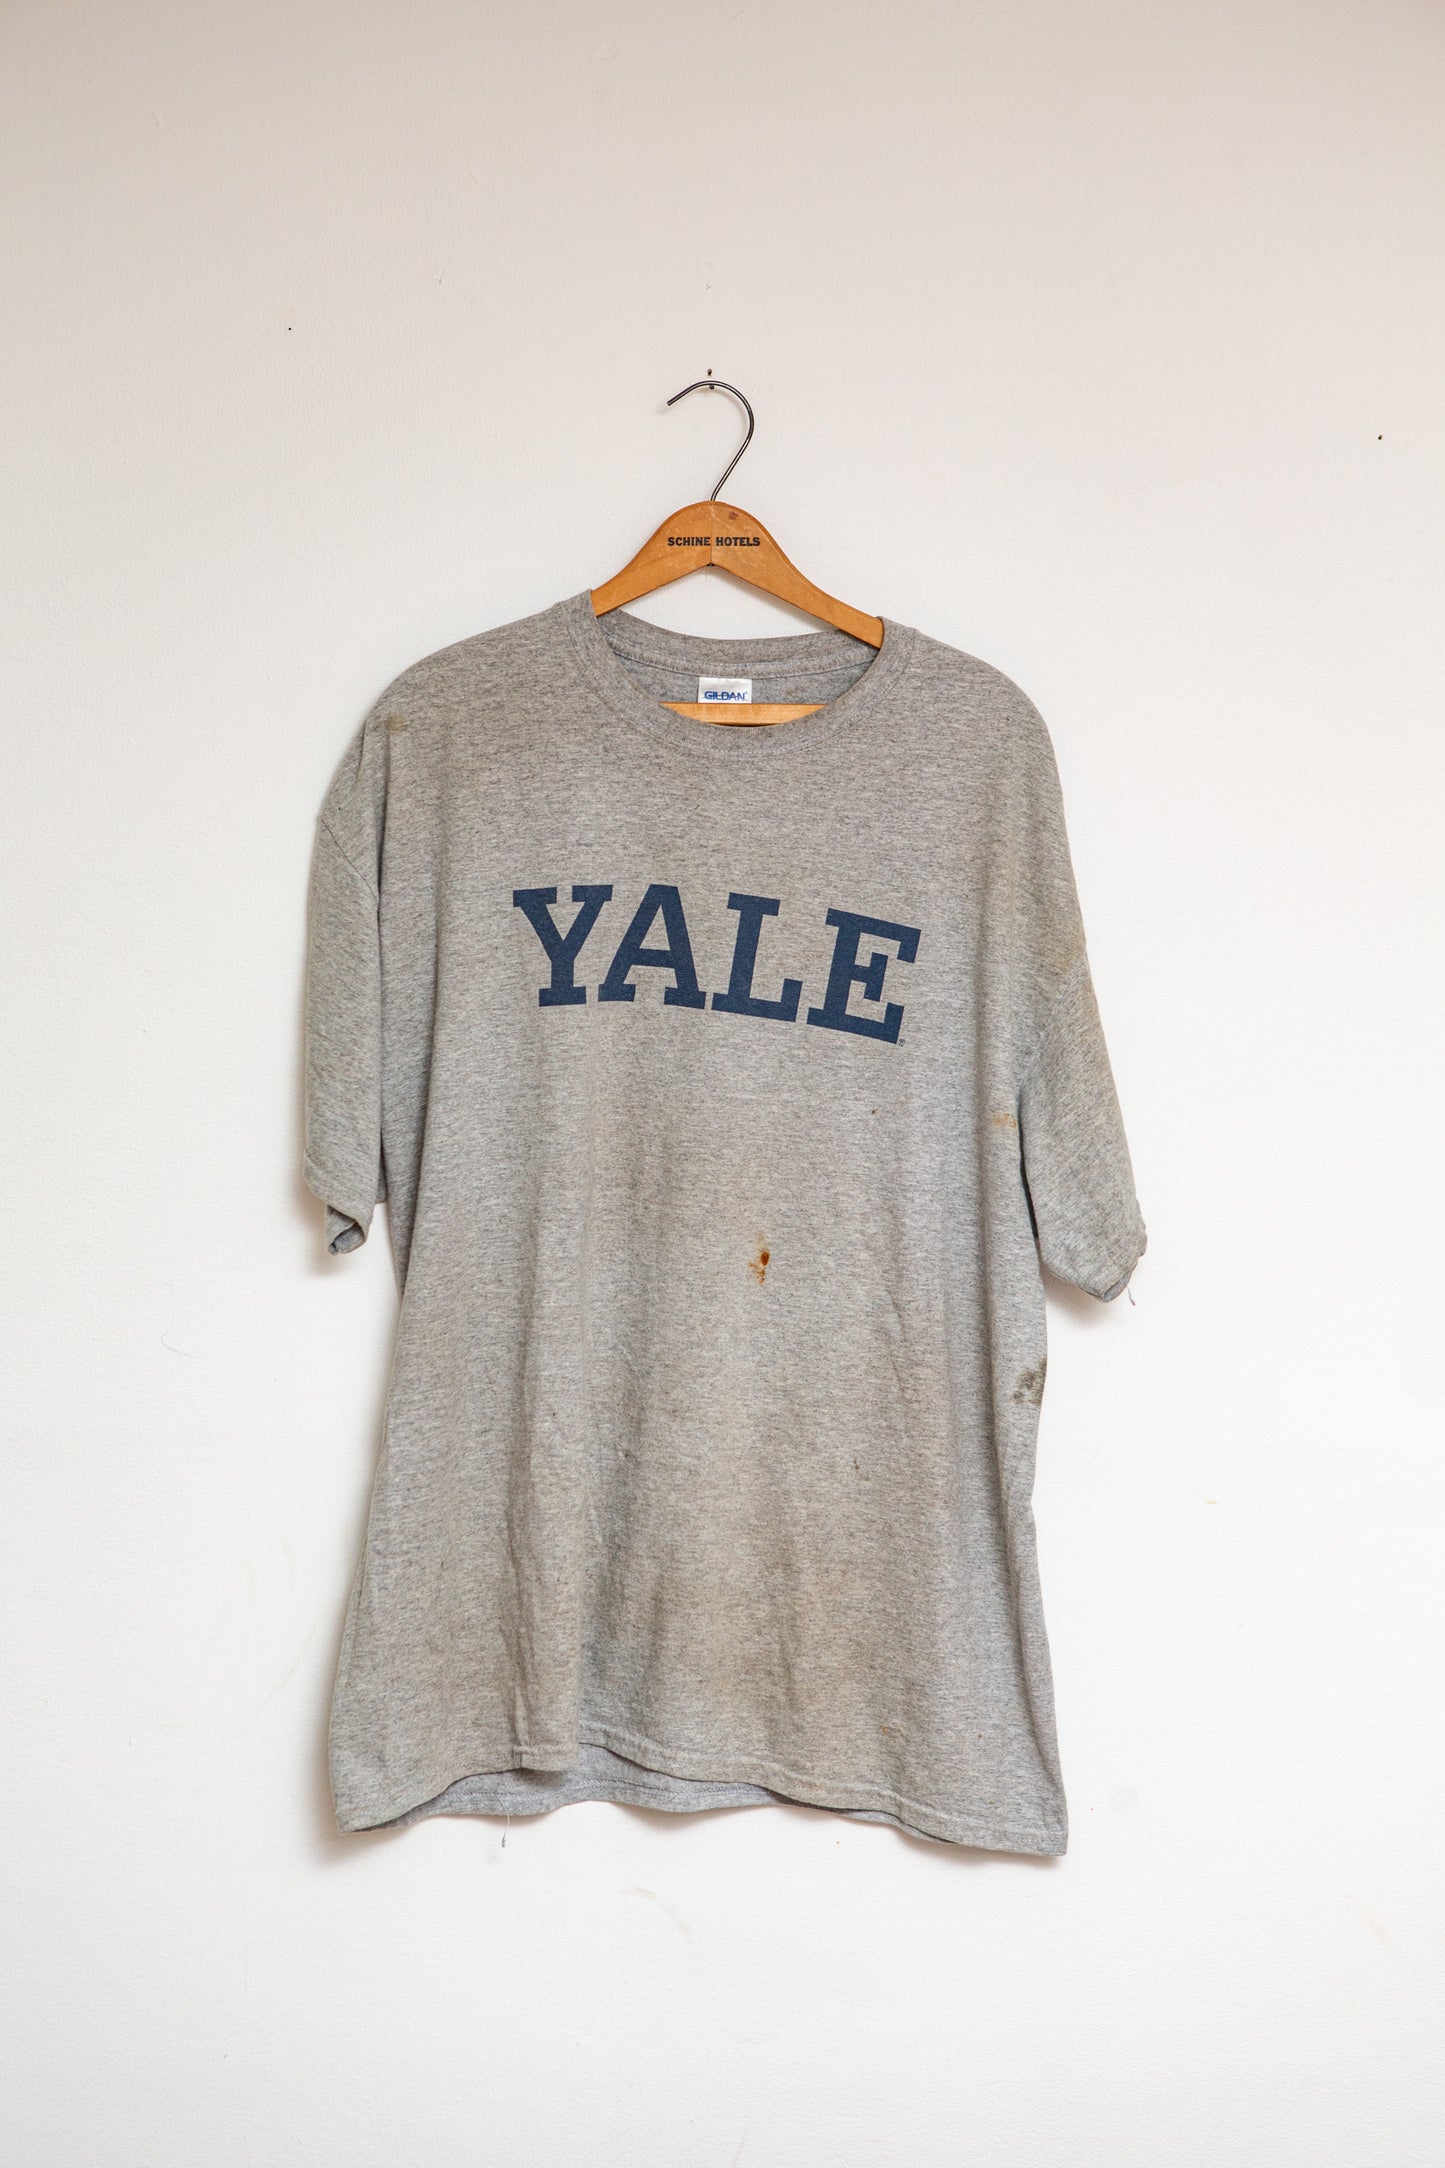 Worn in classic Yale University T-shirt Size XL